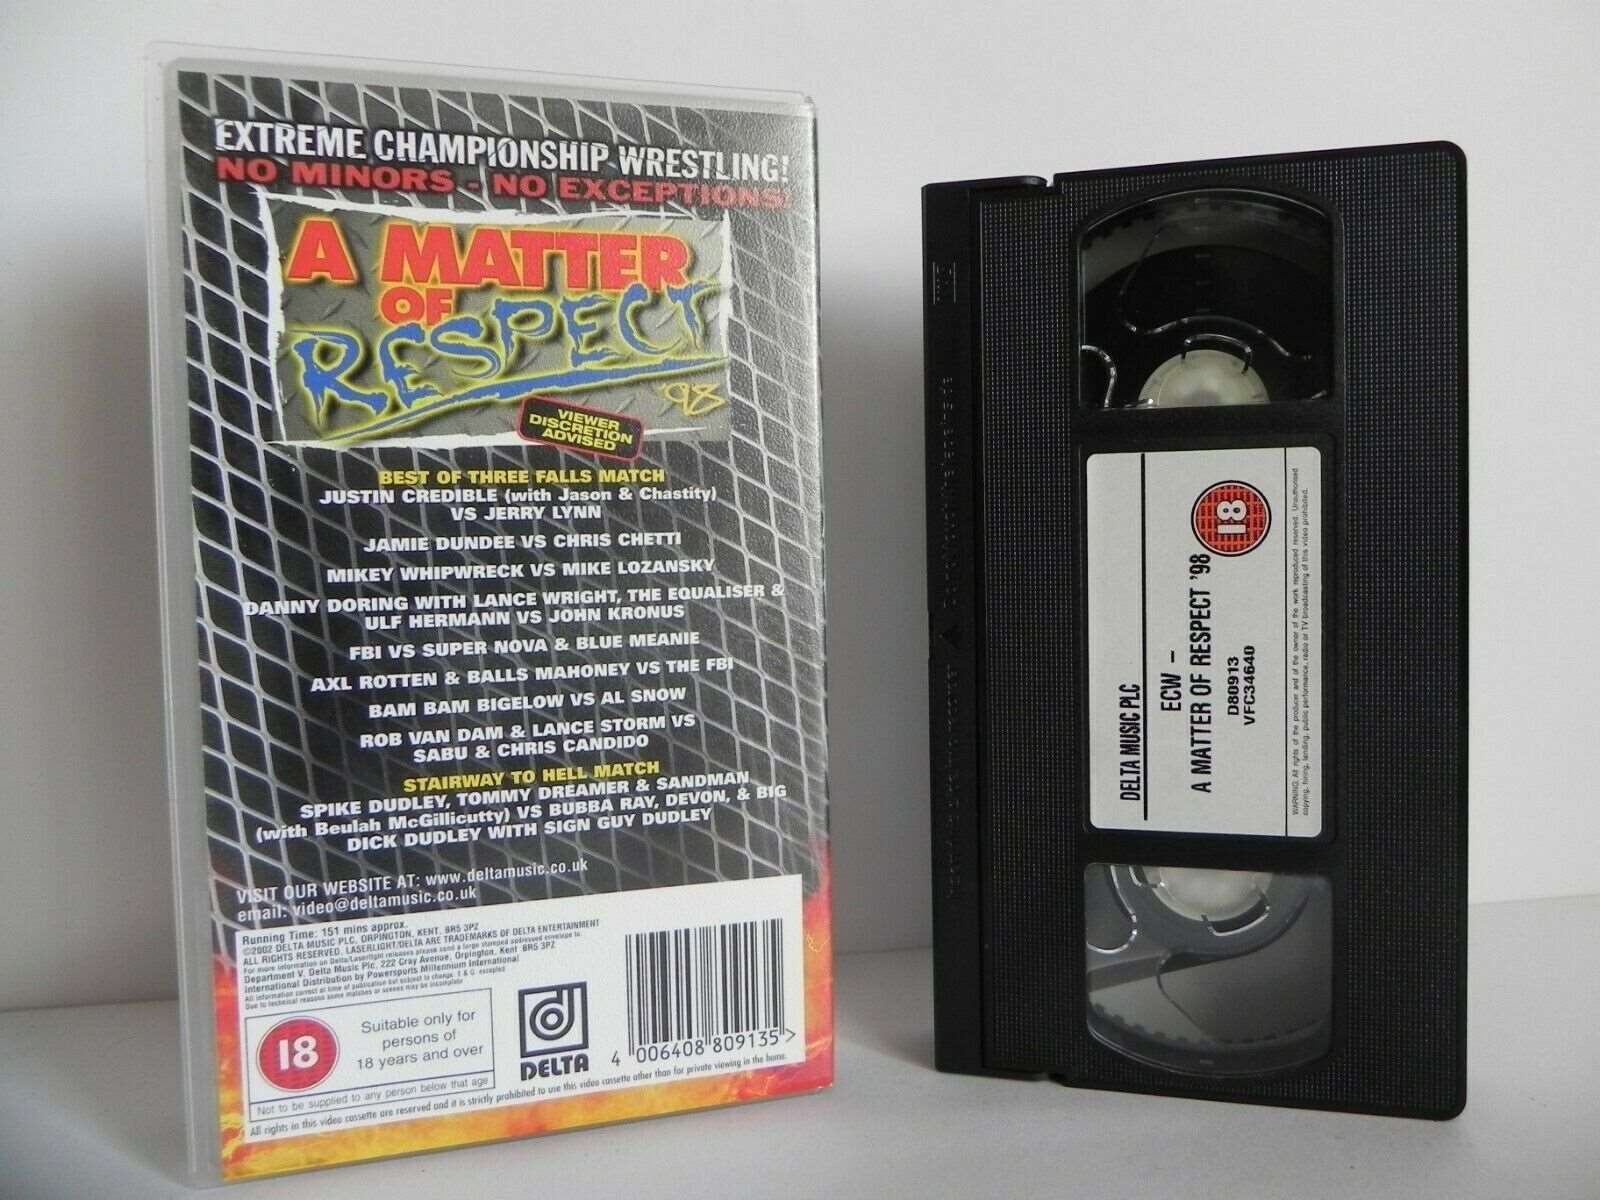 A Master Of Respect '98 - Extreme Championship Wrestling - Cert (18) - Pal VHS-